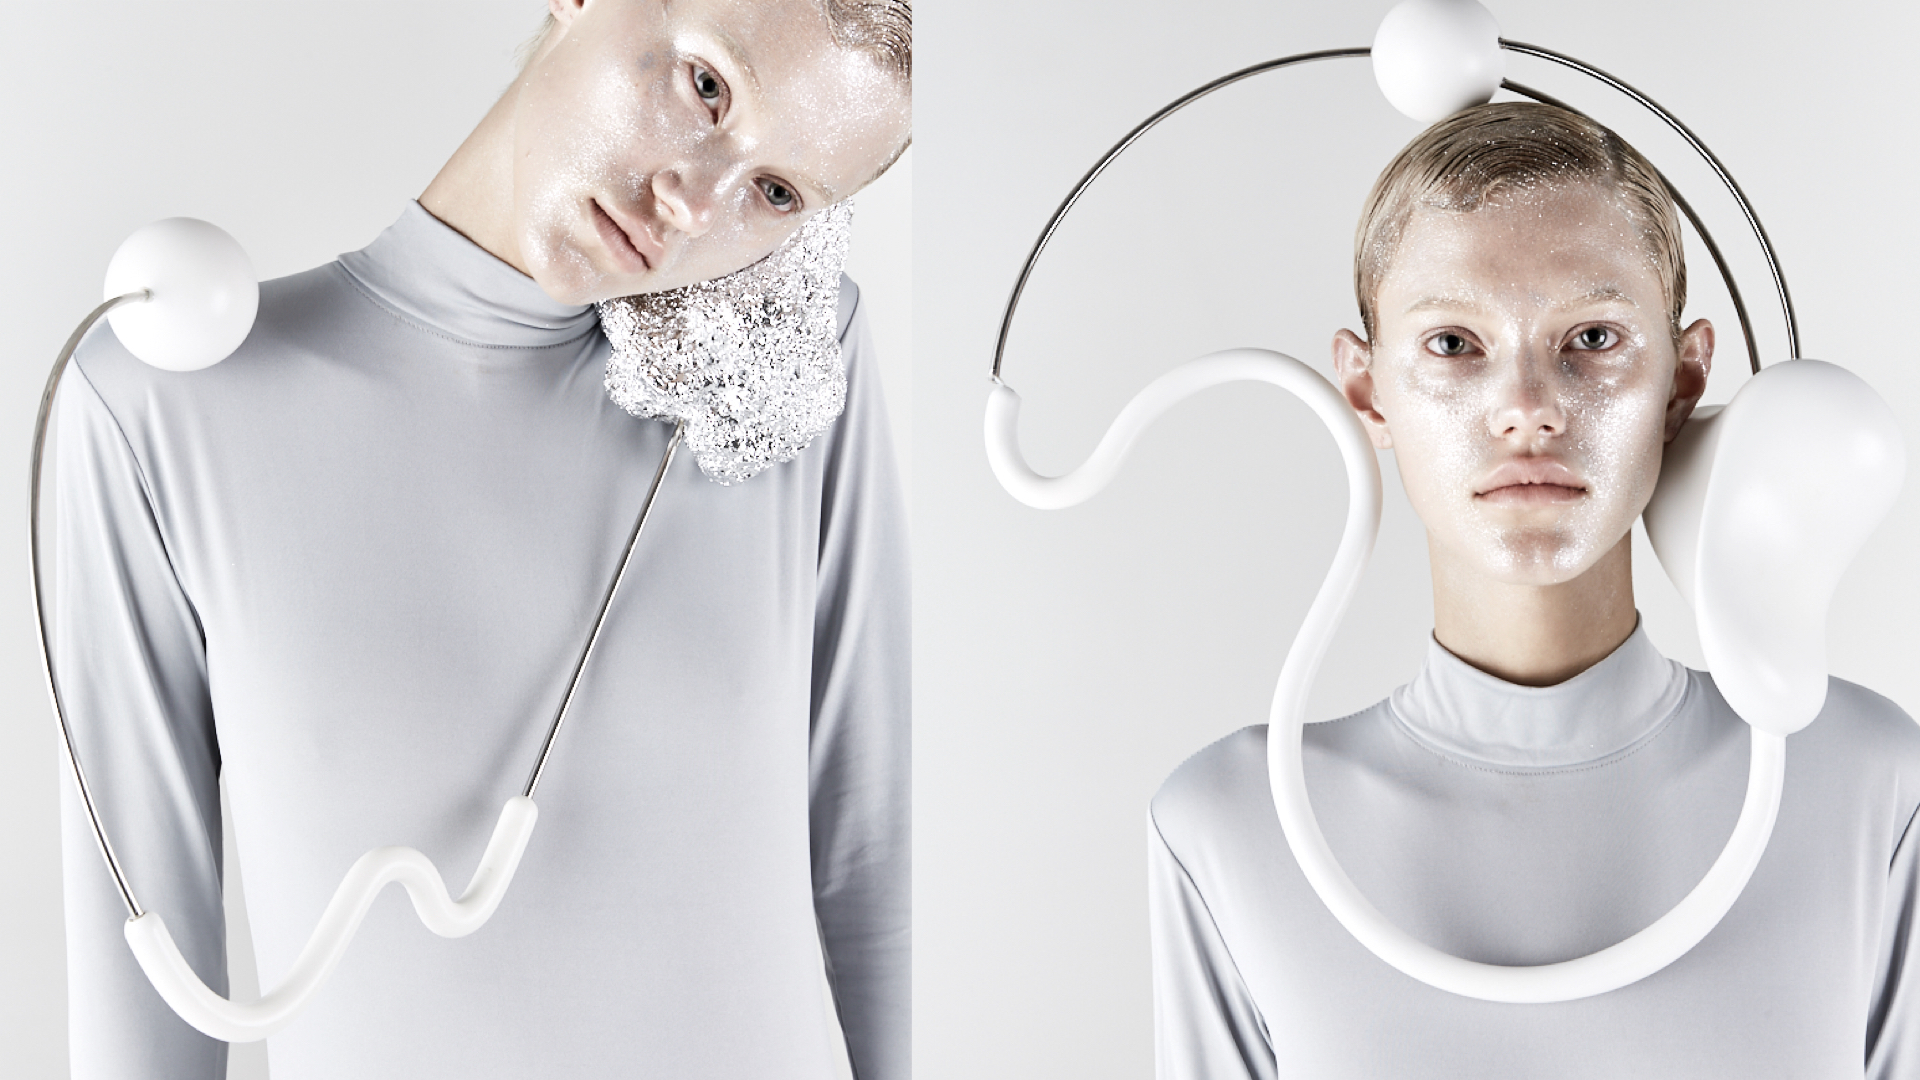 Progetto Weak Entity Virtual Fashion series, Future Body, 2022, courtesy of the artists. Future Body, VIDEO NFT, 2022,